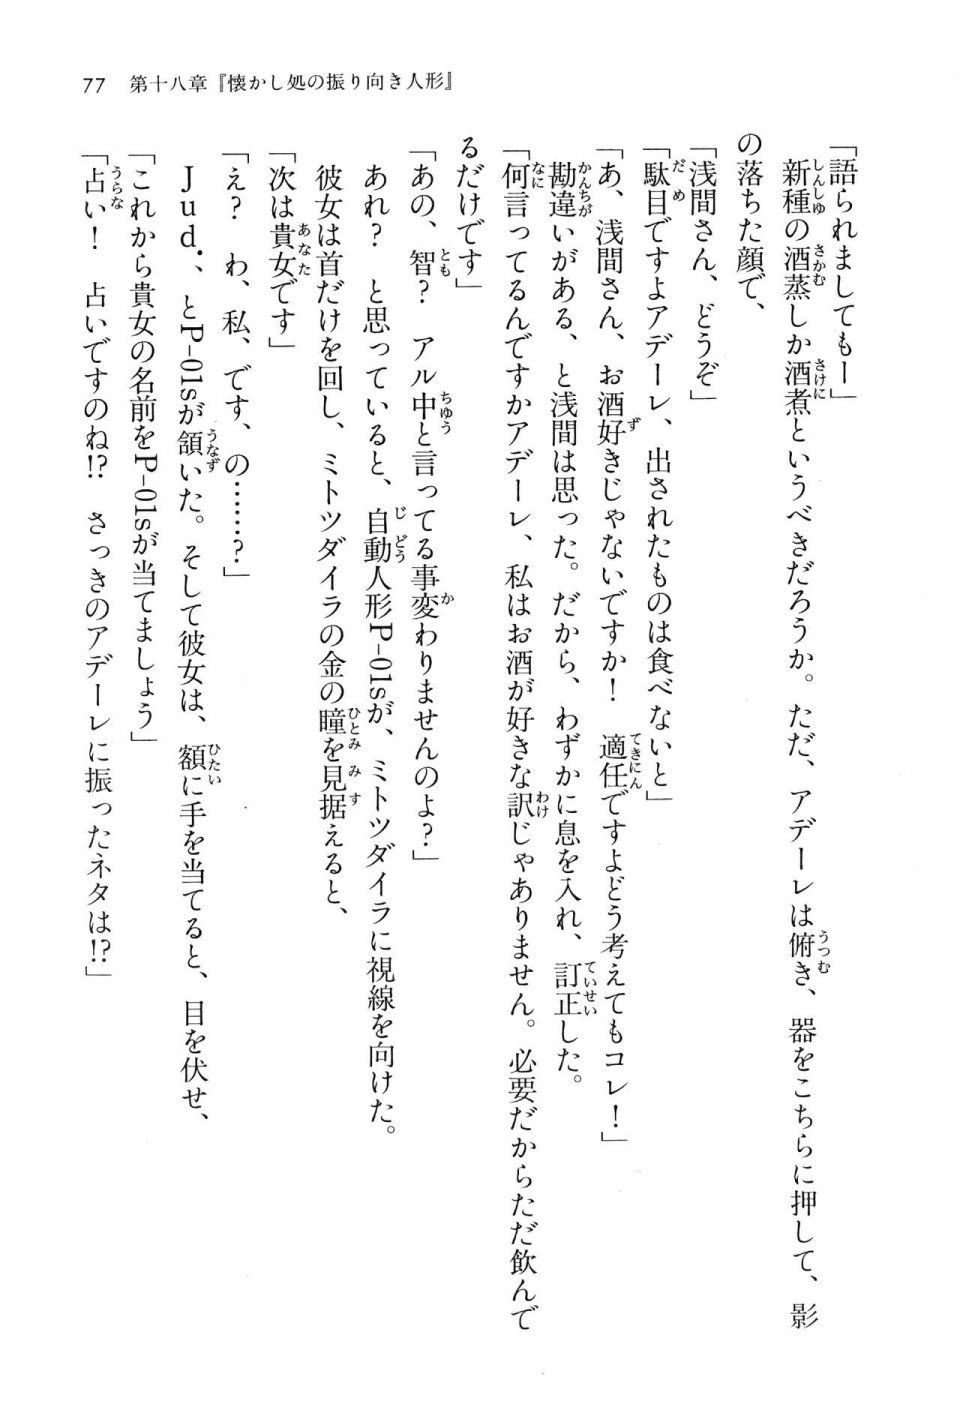 Kyoukai Senjou no Horizon BD Special Mininovel Vol 4(2B) - Photo #81